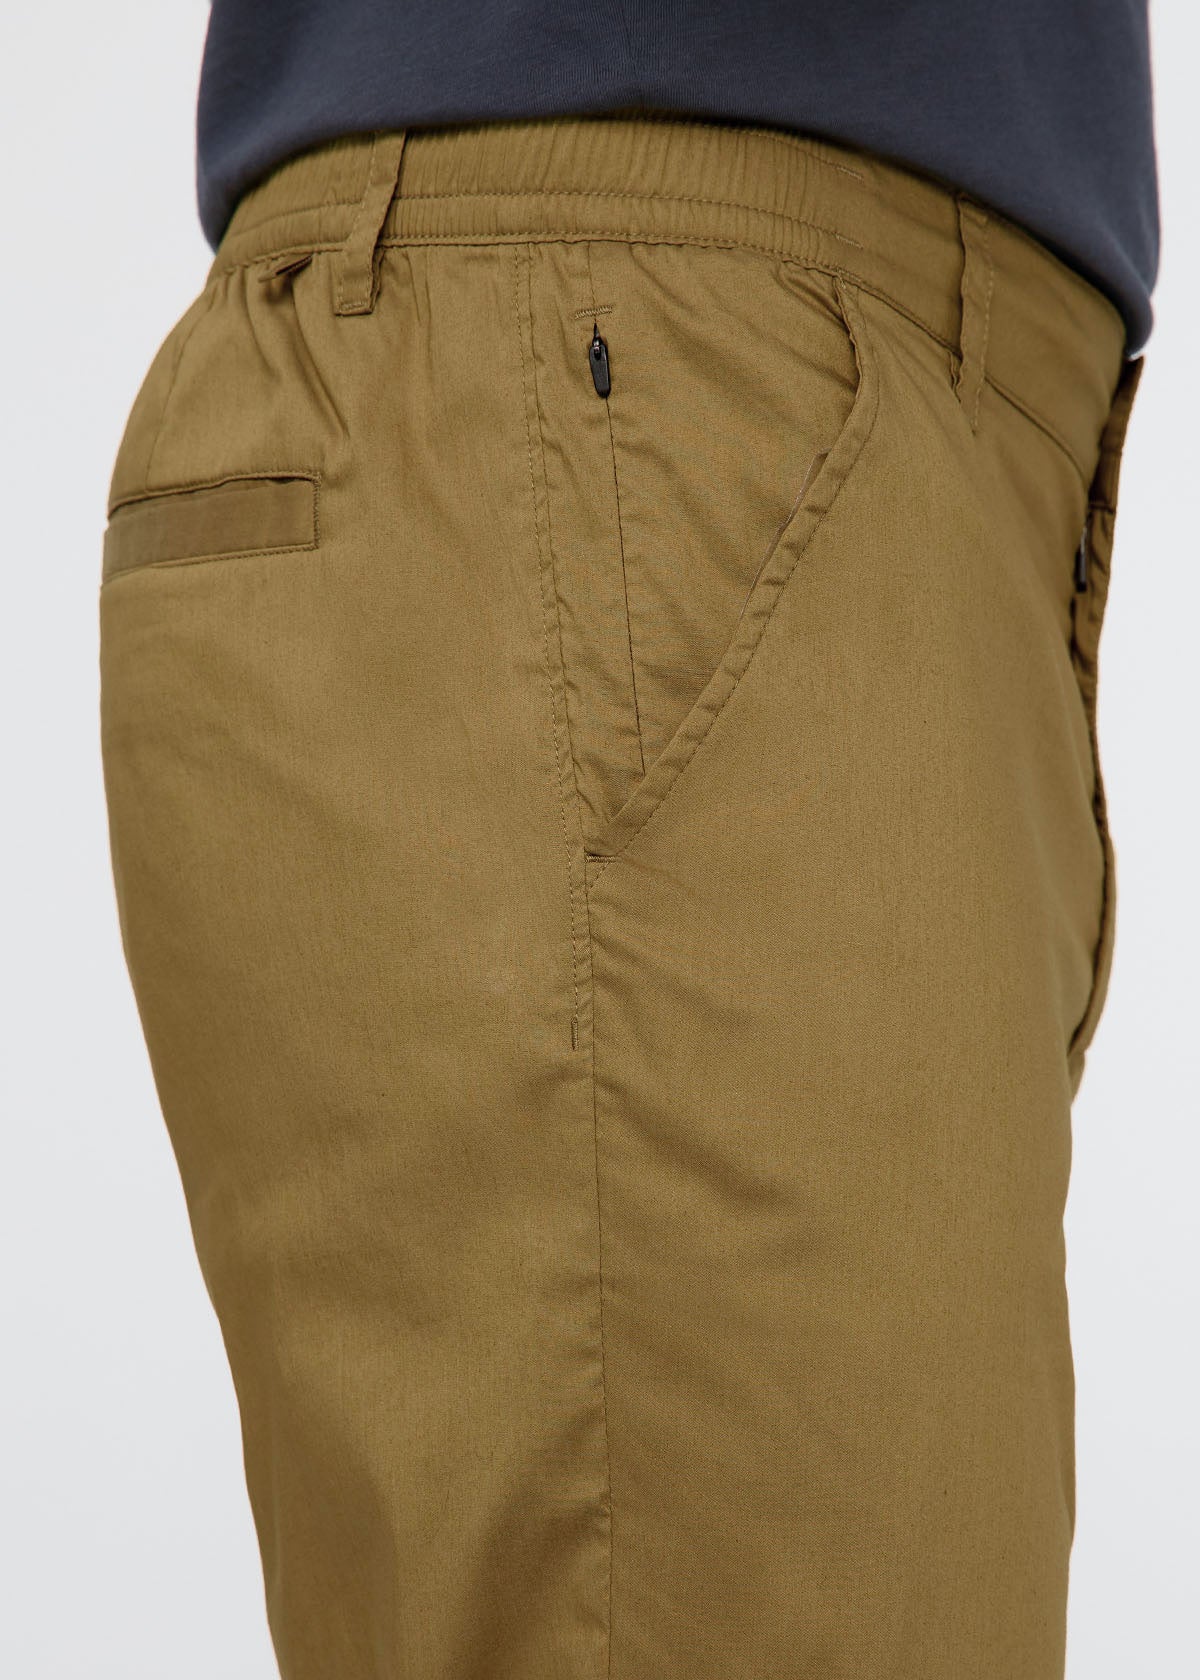 mens brown lightweight summer travel pants side detail